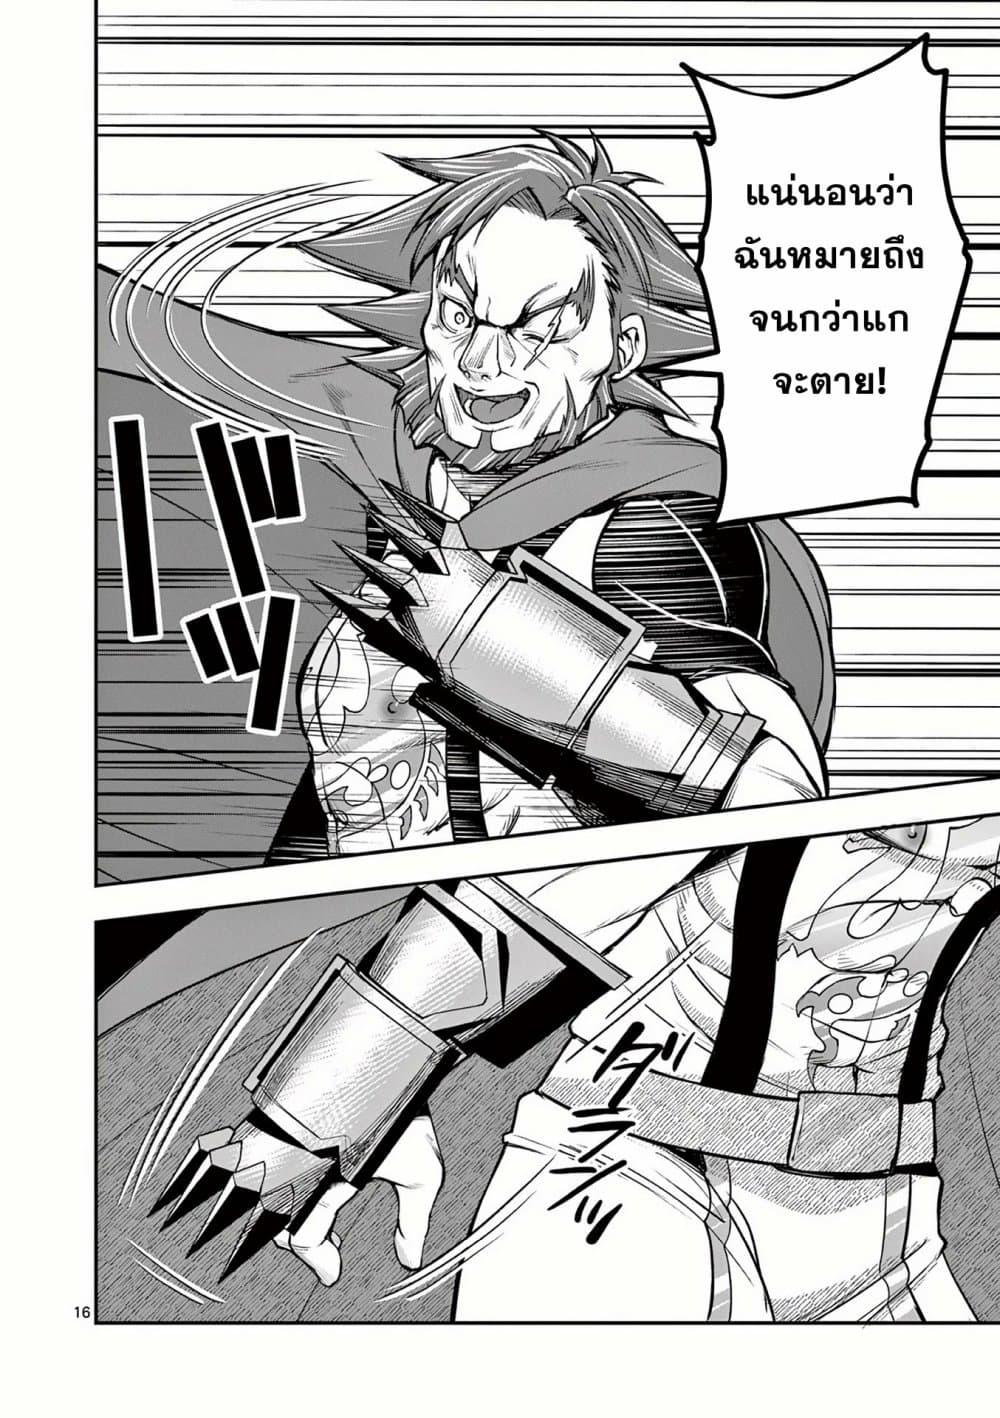 Moto Shogun no Undead Knight 11-11